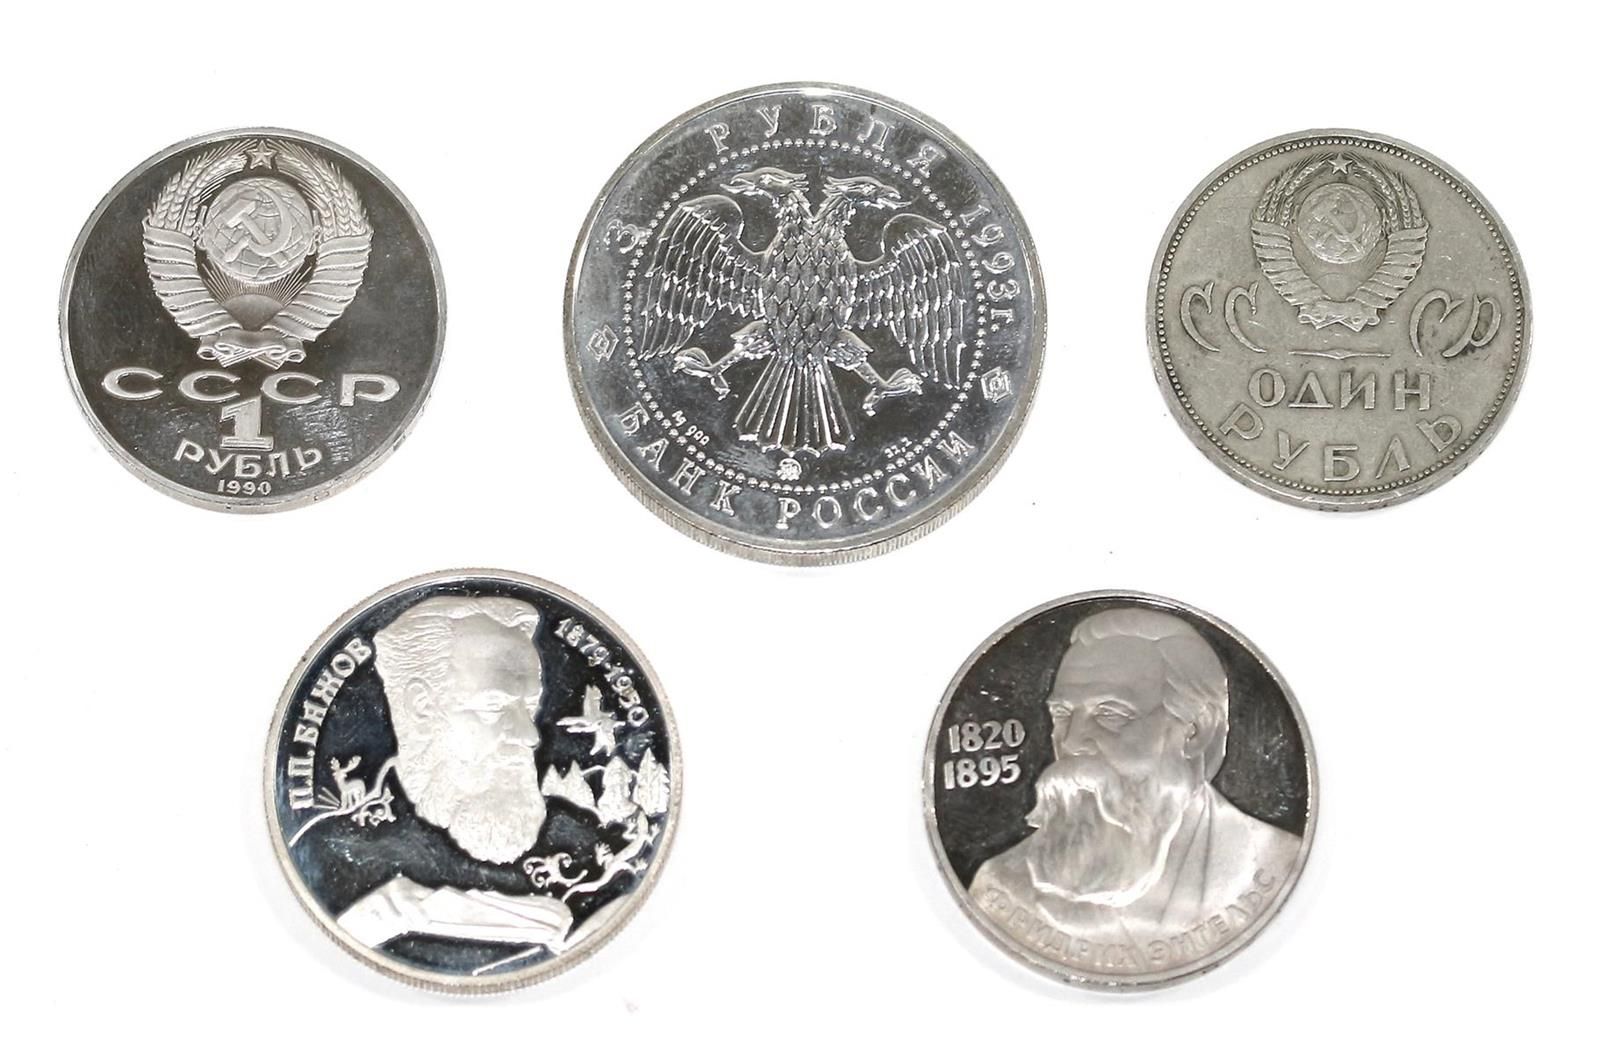 Russland Colección de monedas más de 60 monedas, monedas de circulación, monedas&hellip;